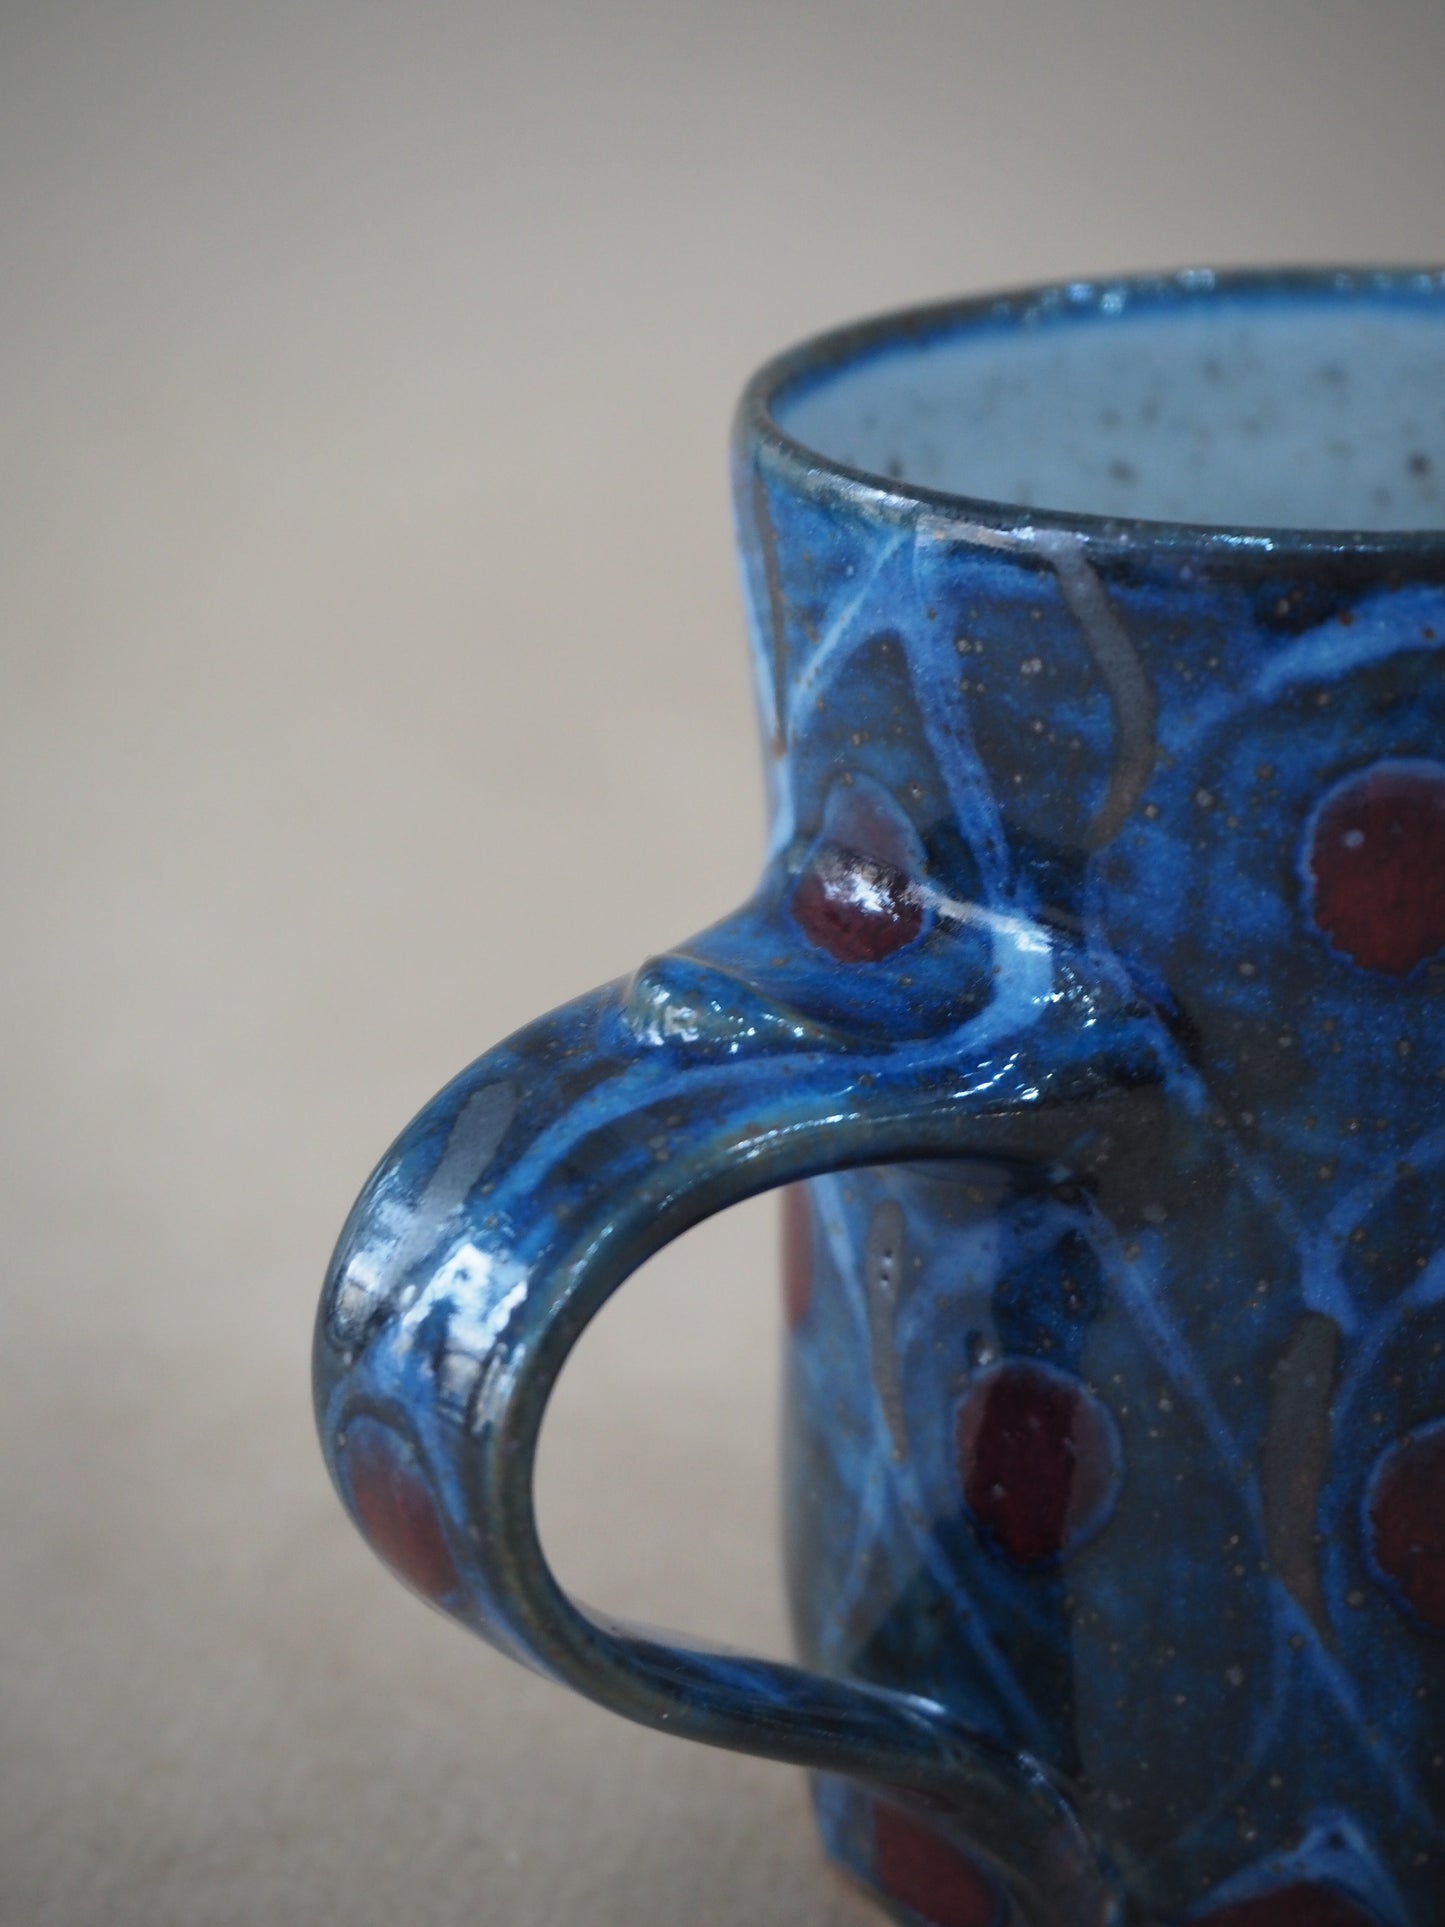 Goldsmith, Robert – Small Red, Blue & Silver Peacock Mug